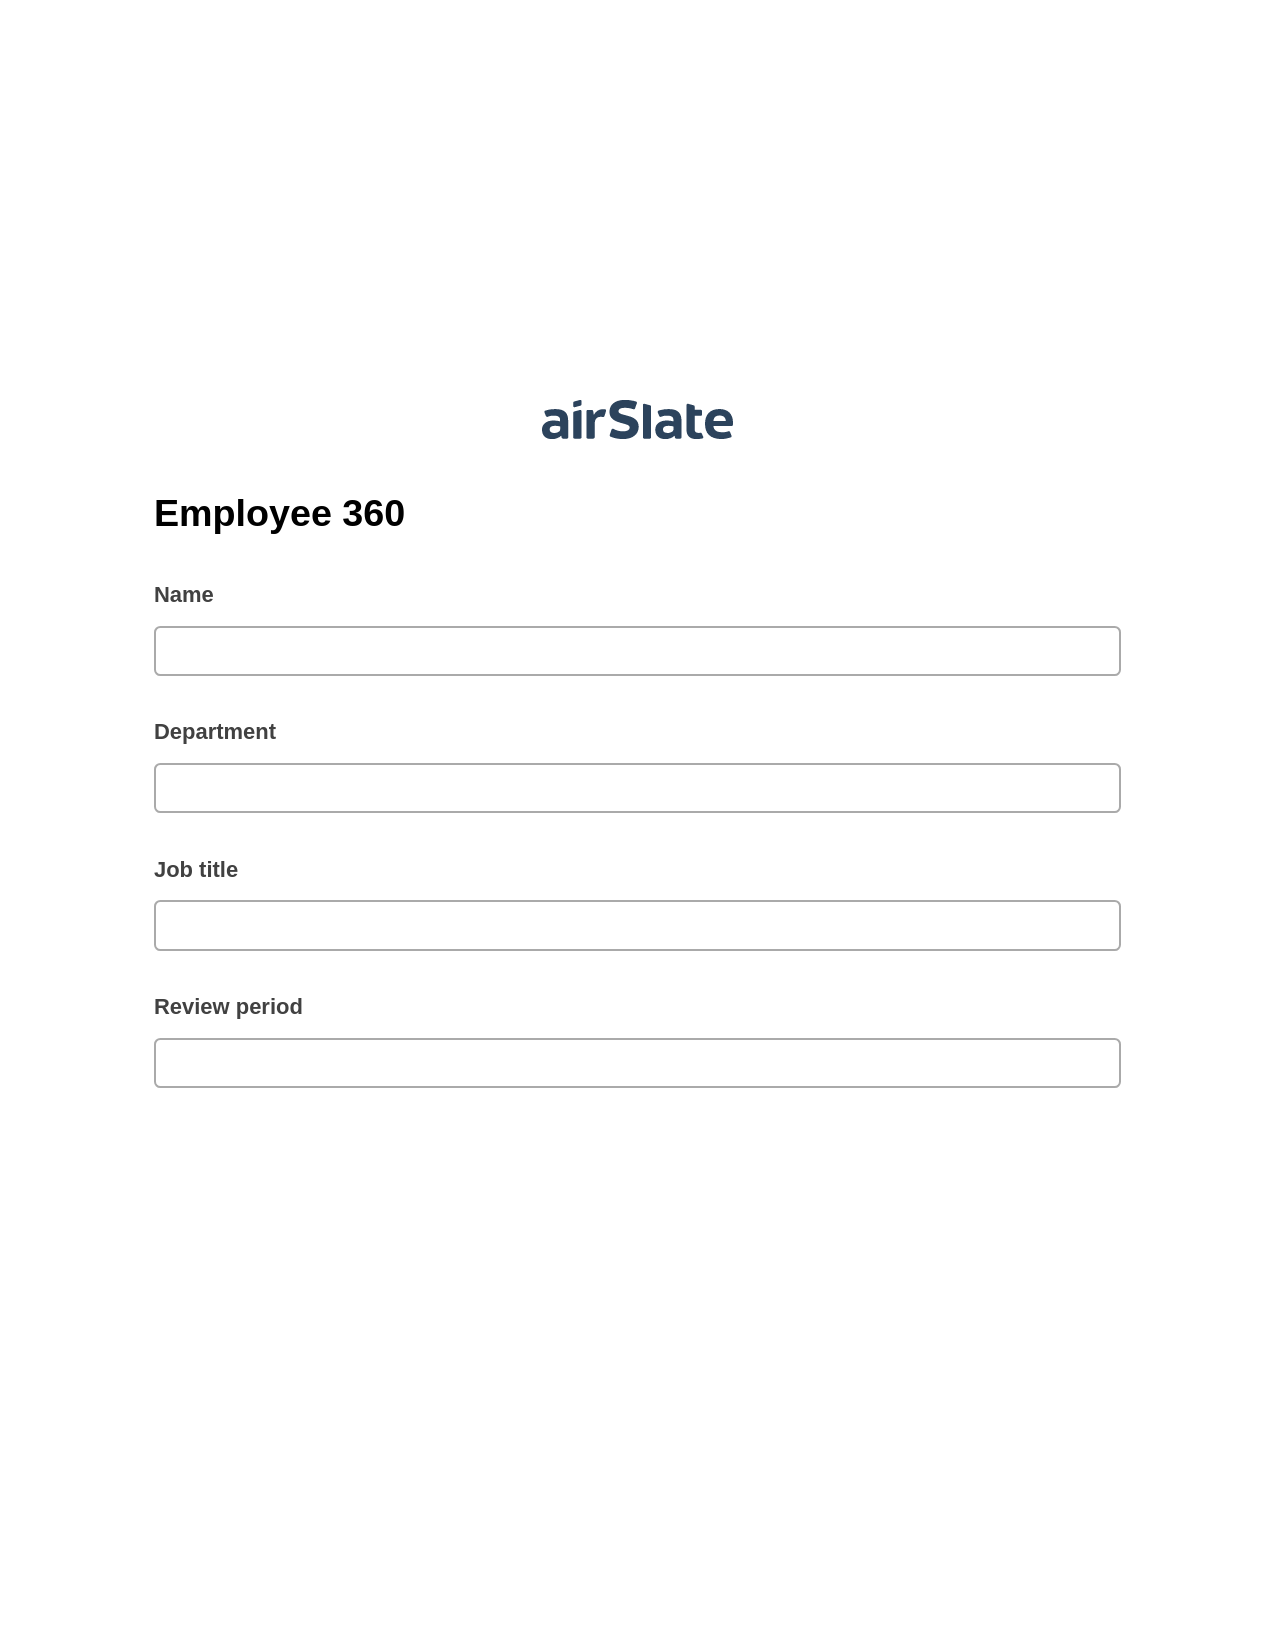 Multirole Employee 360 Pre-fill from Salesforce Records Bot, Revoke Access Bot, Slack Two-Way Binding Bot